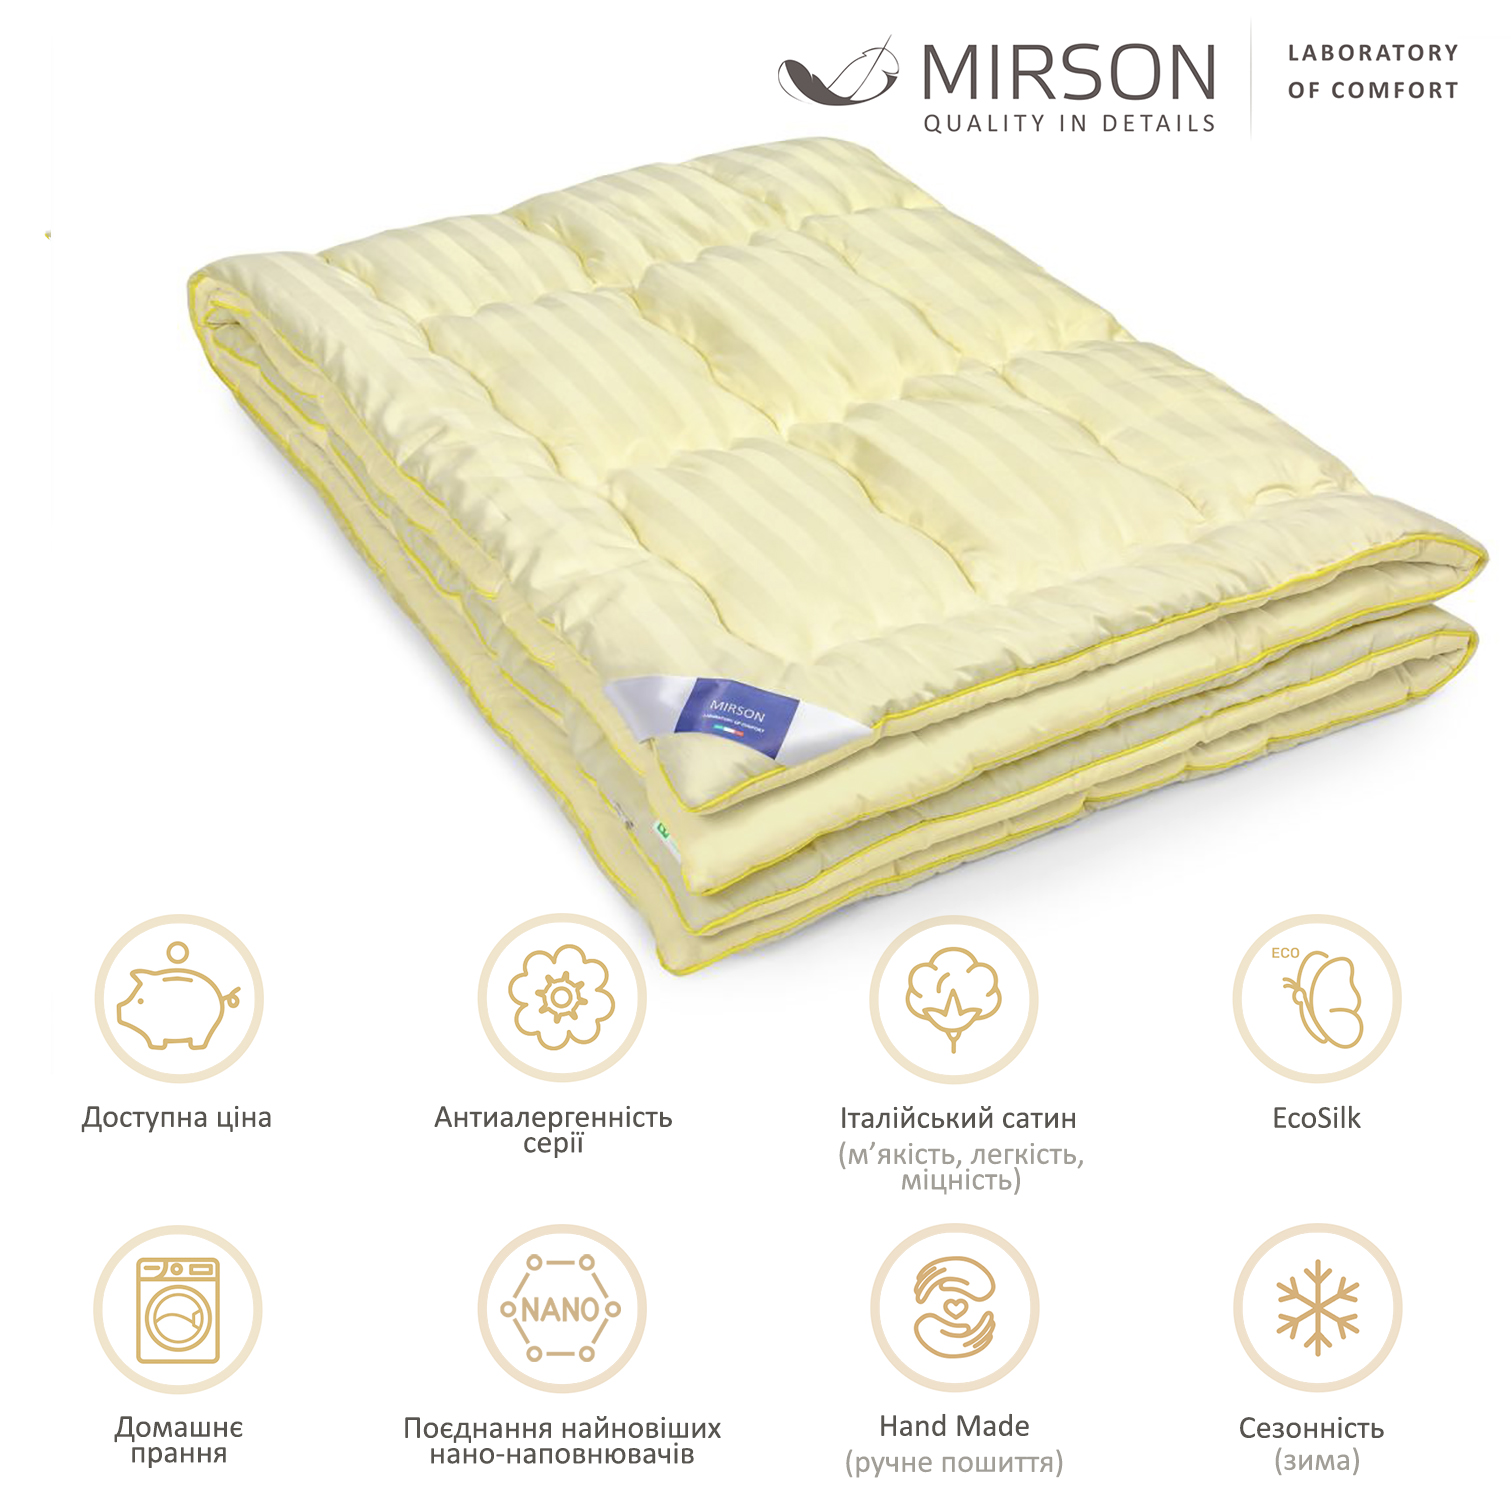 Одеяло антиаллергенное MirSon Carmela Hand Made EcoSilk №068, зимнее, 200x220 см, светло-желтое - фото 4